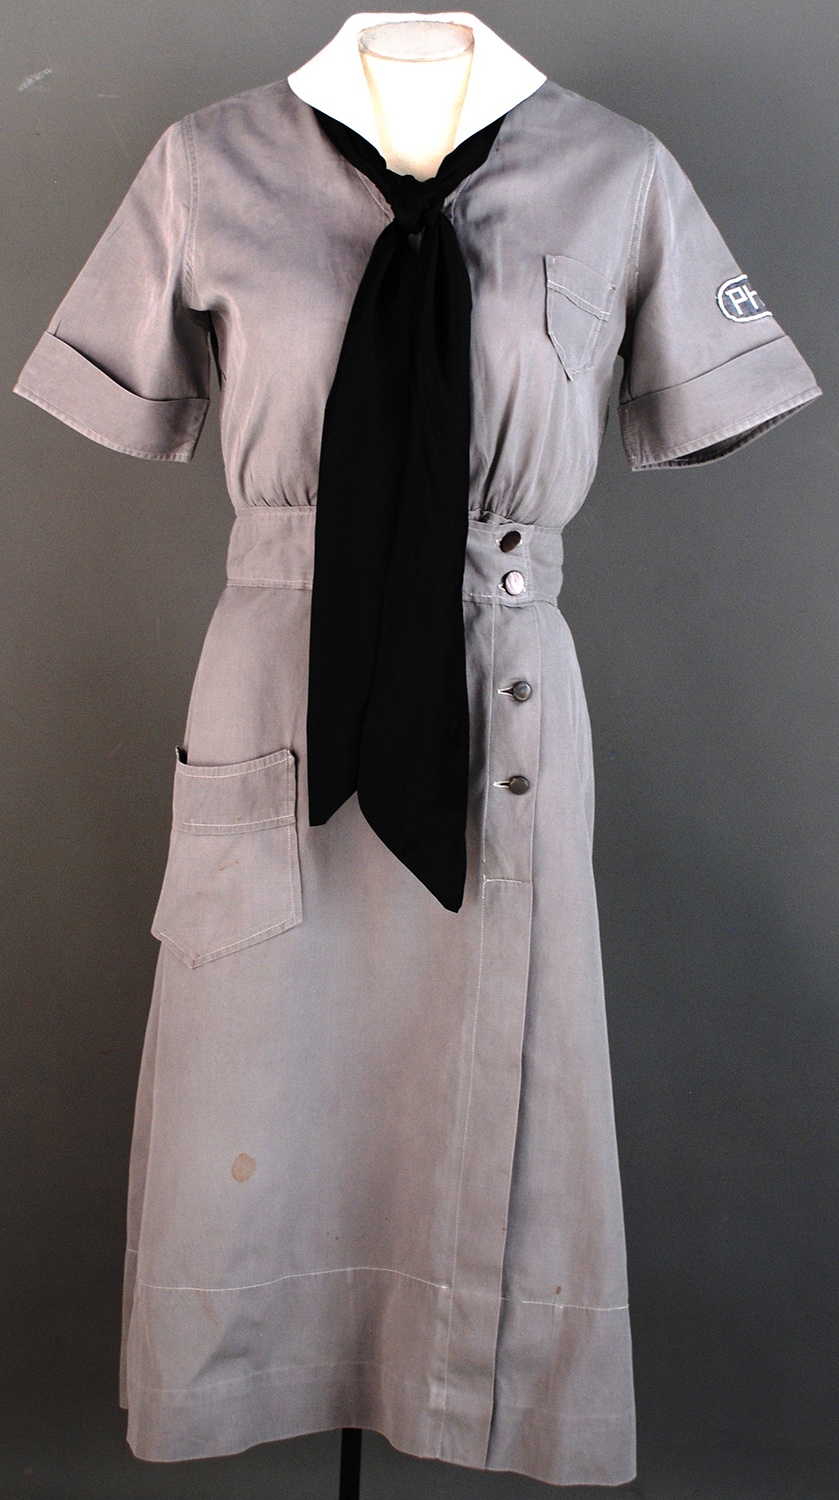 Public Health Nurse uniform worn by Anne M. Nixon, 1930s. Gift of Anne M. Nixon, 1995.0049, Heinz History Center Museum Collections.